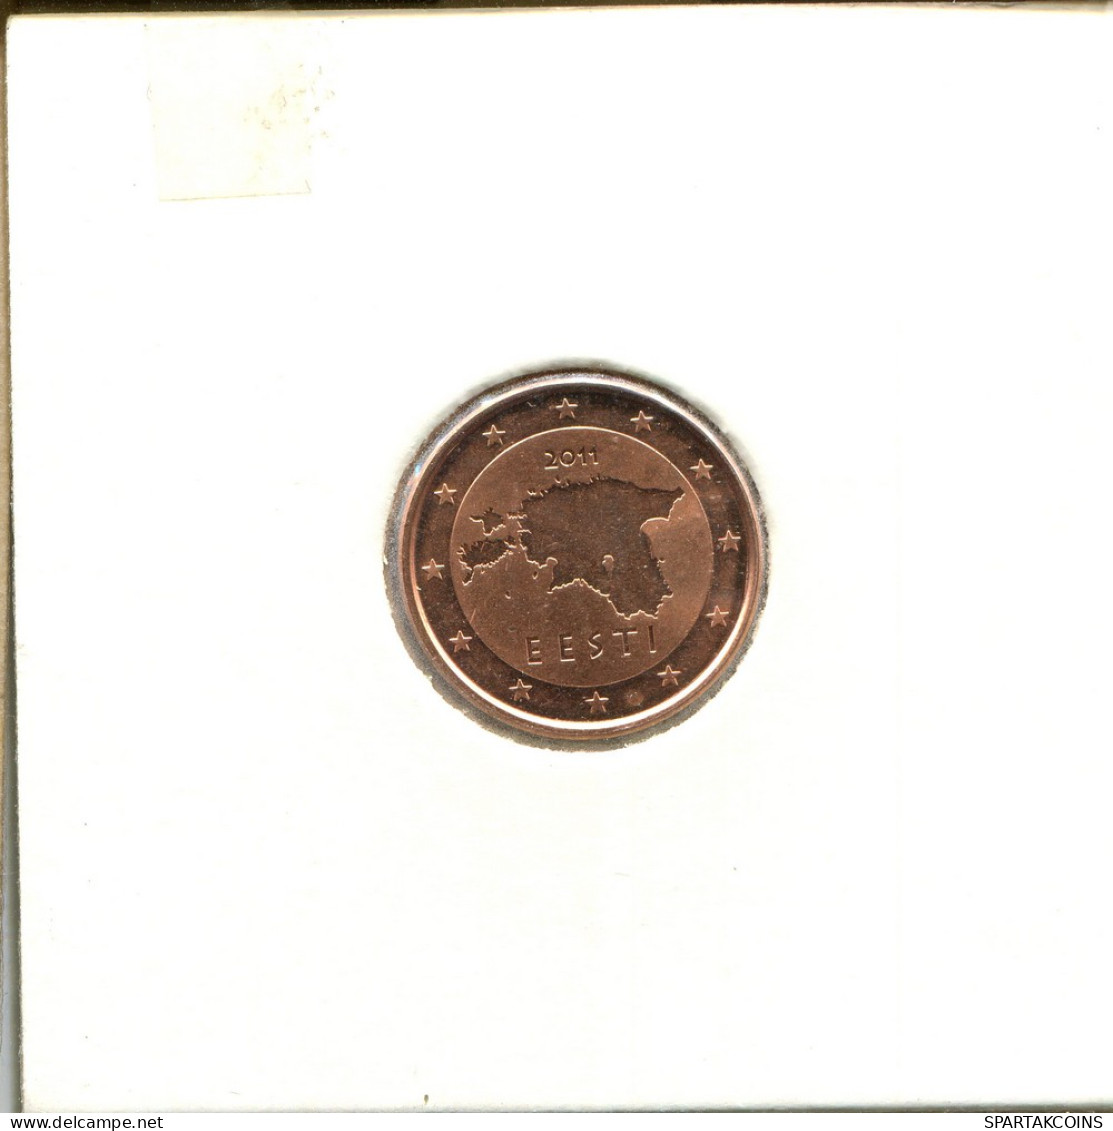 1 CENT 2011 ESTONIA Coin #AS692.U - Estonia